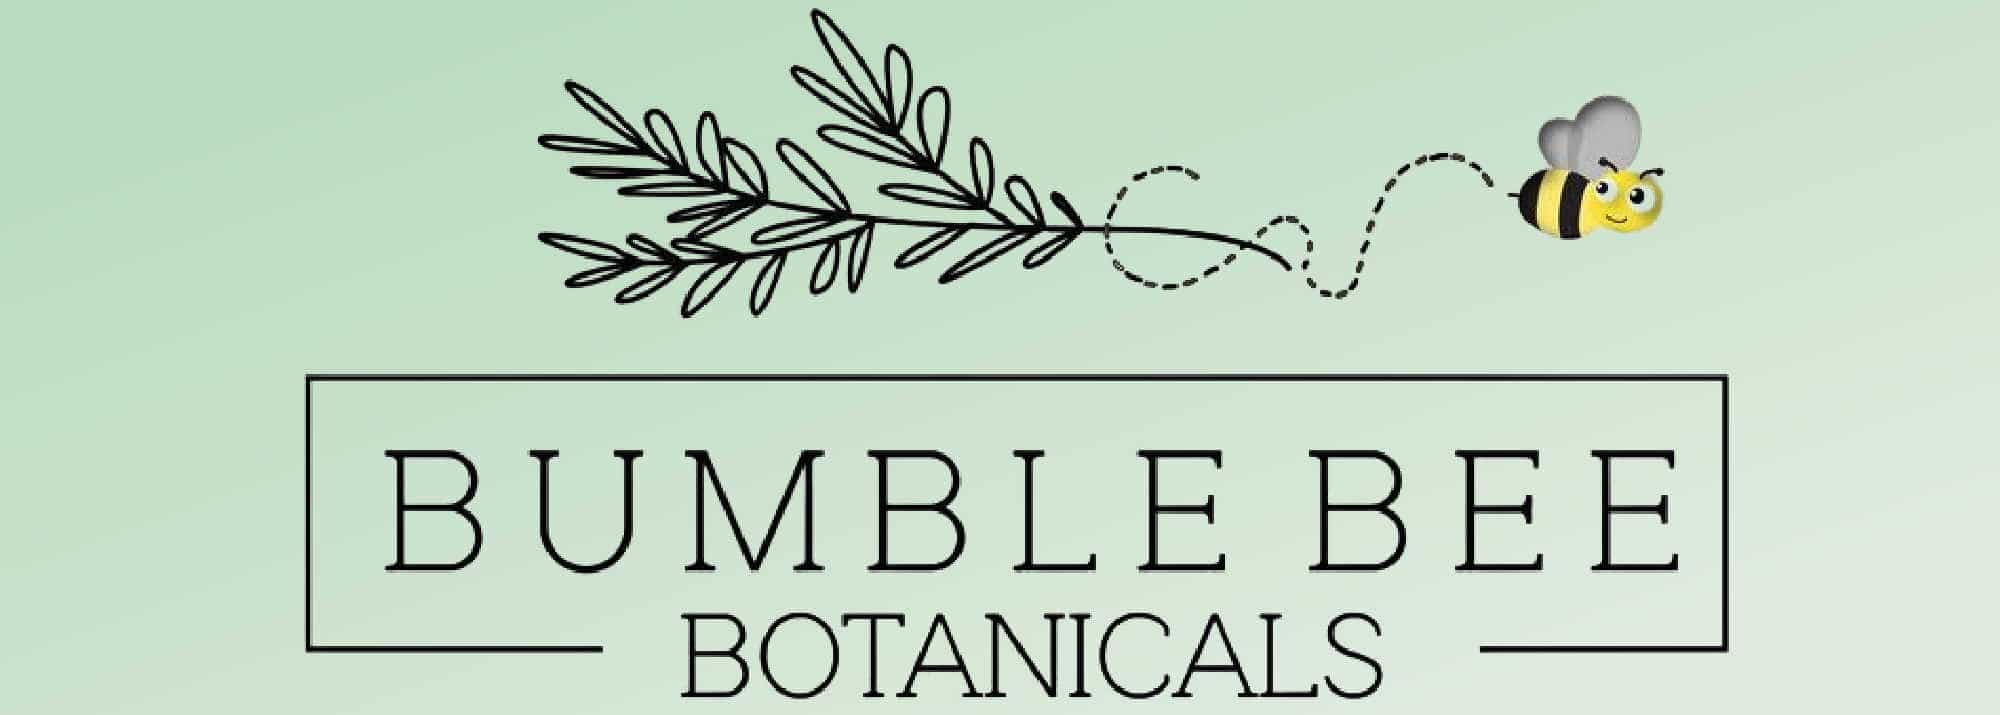 image of bumble bee botanicals logo